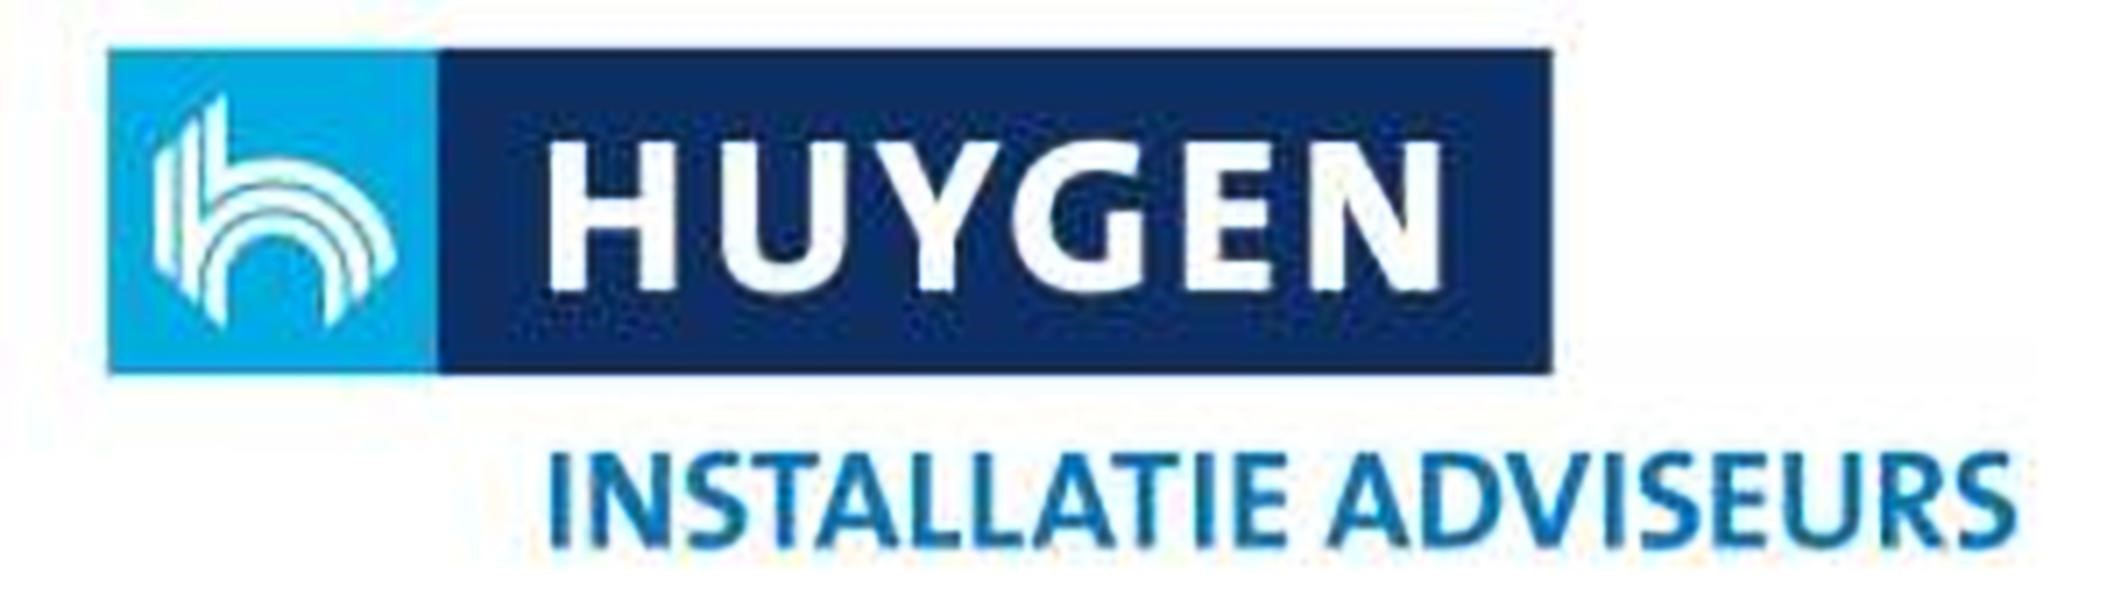 Logo Huygen Installatie Adviseurs 